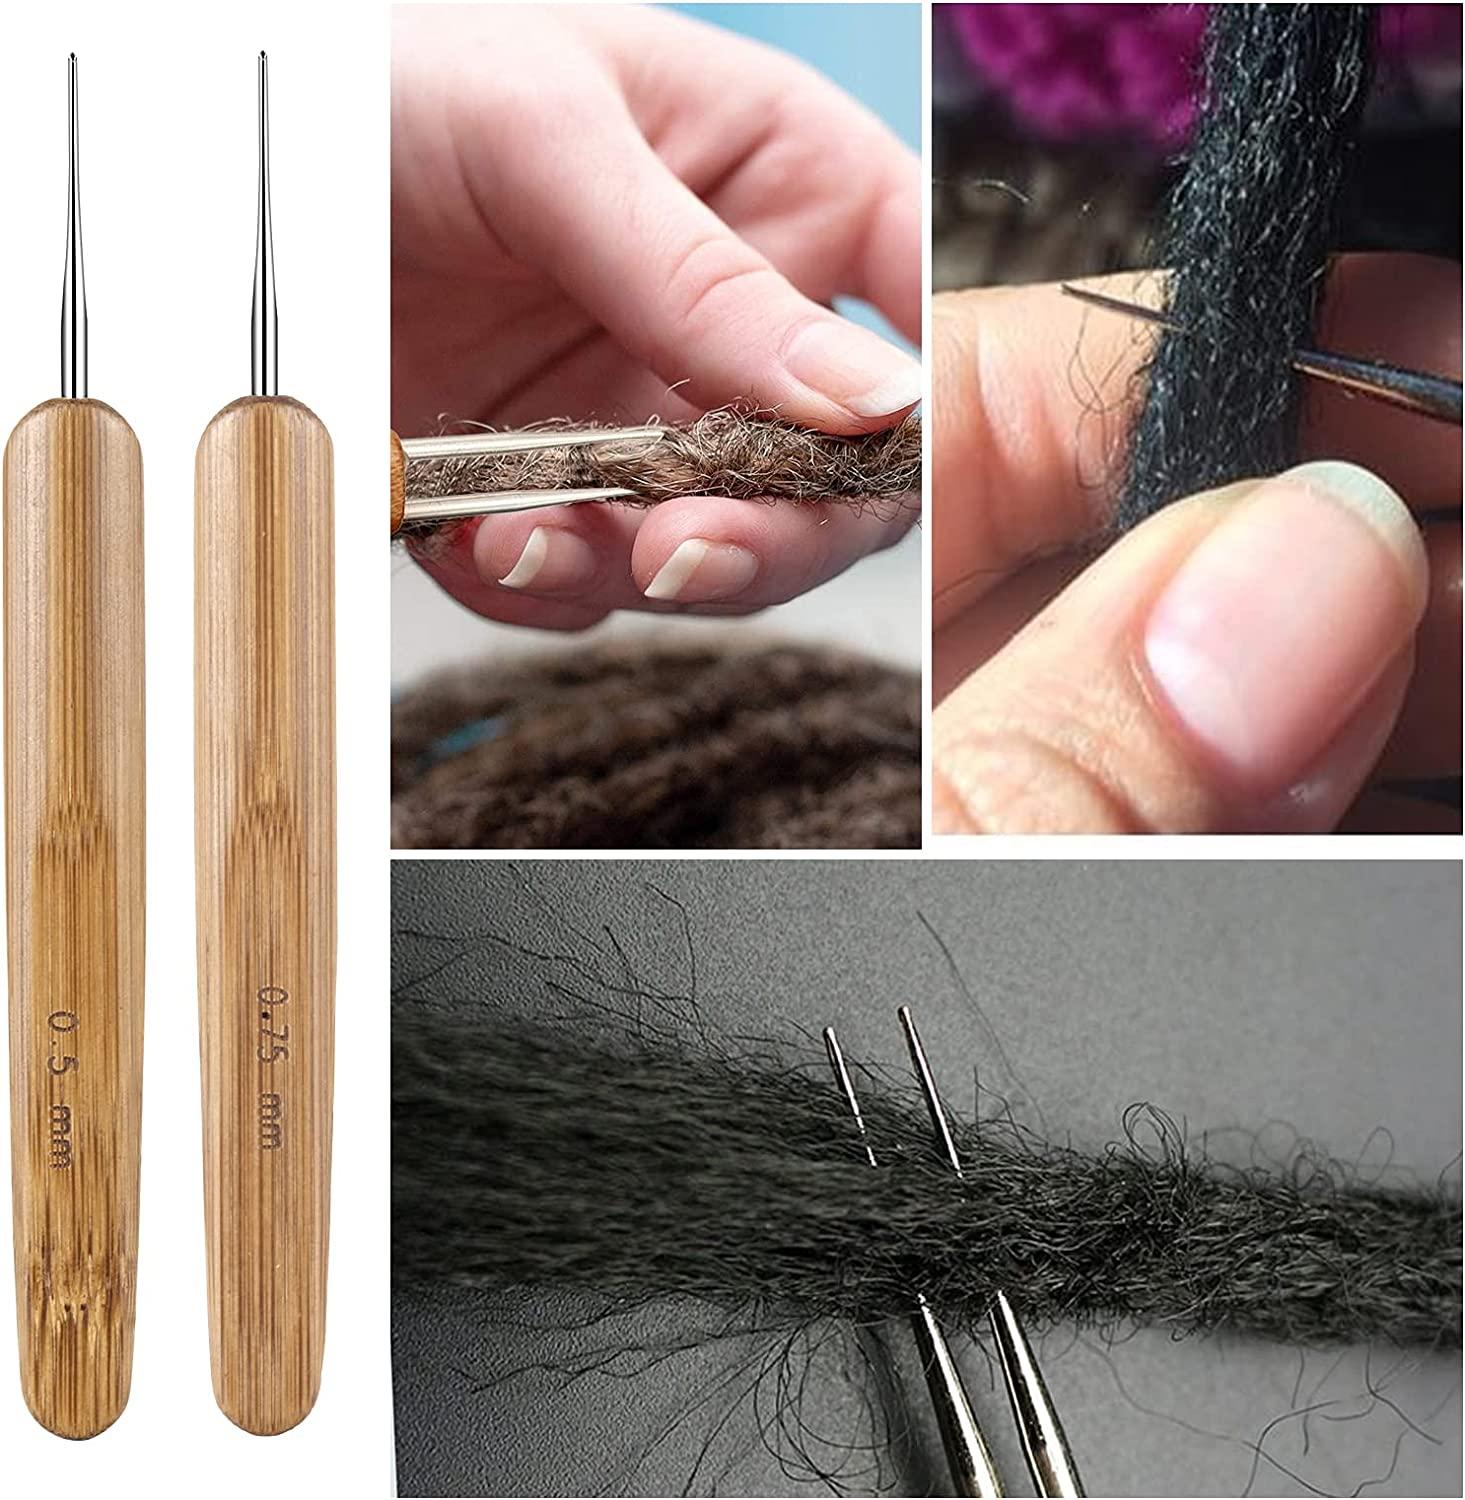 Bamboo Crochet Needle Hooks.100% Natural Bamboo Handle Tool Making